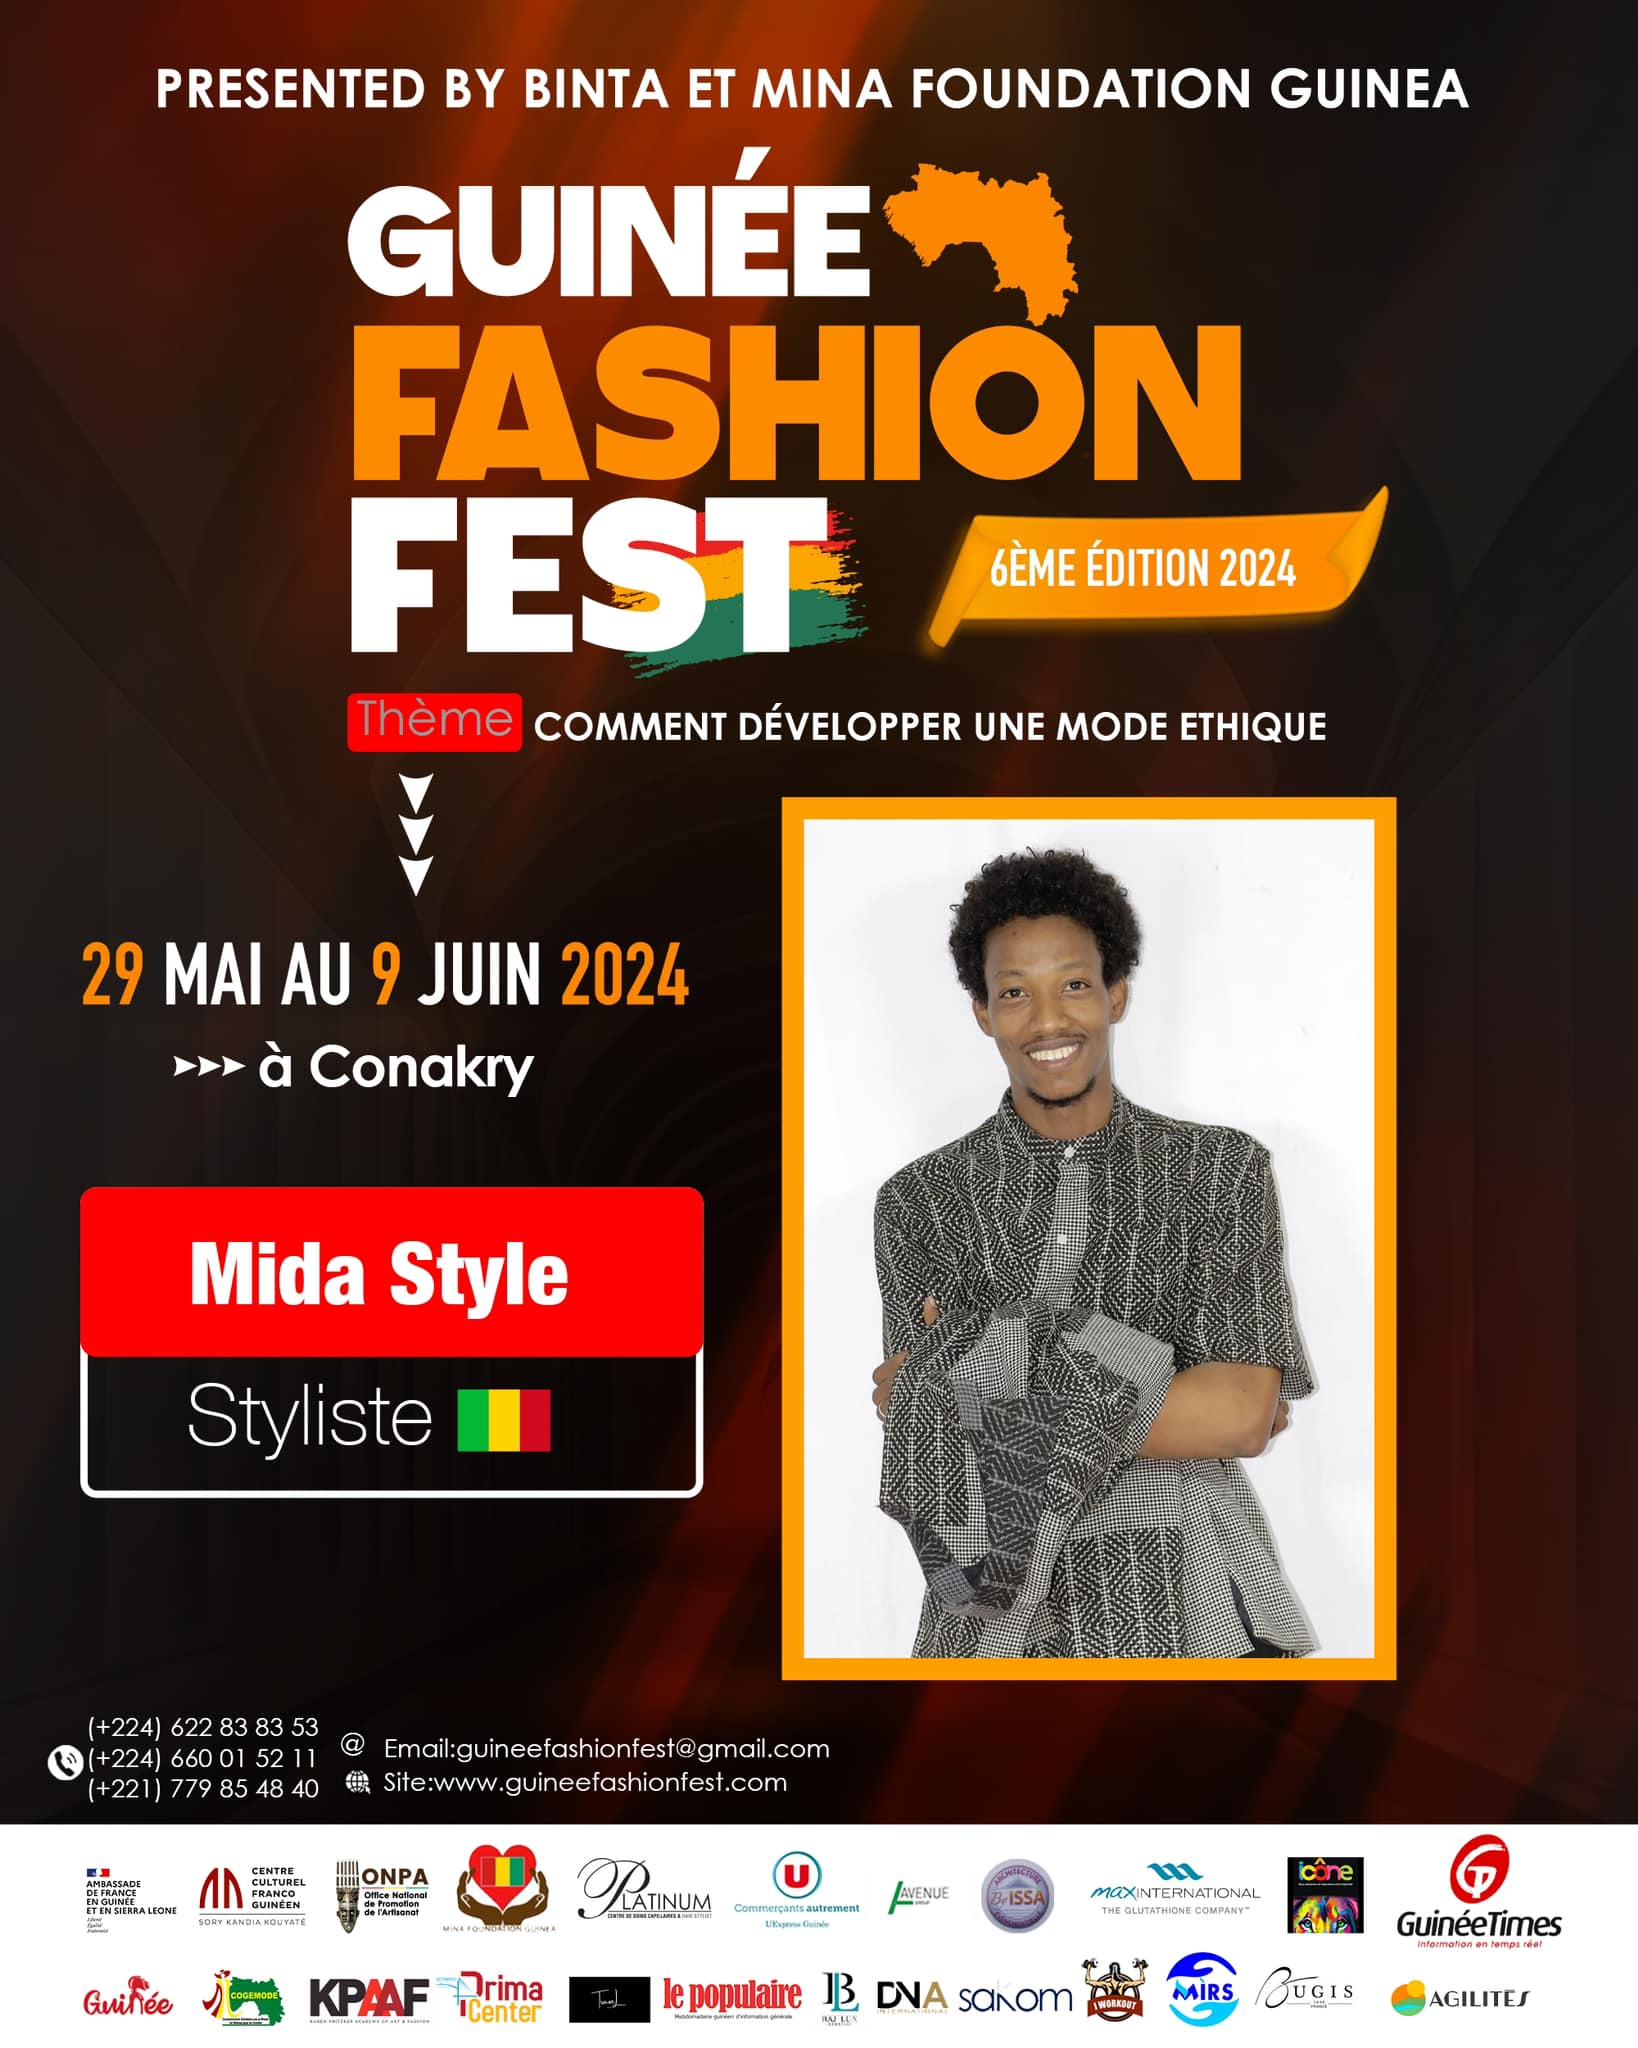 GUINEE FASHION FEST, EDITION 6, MIDA STYLE